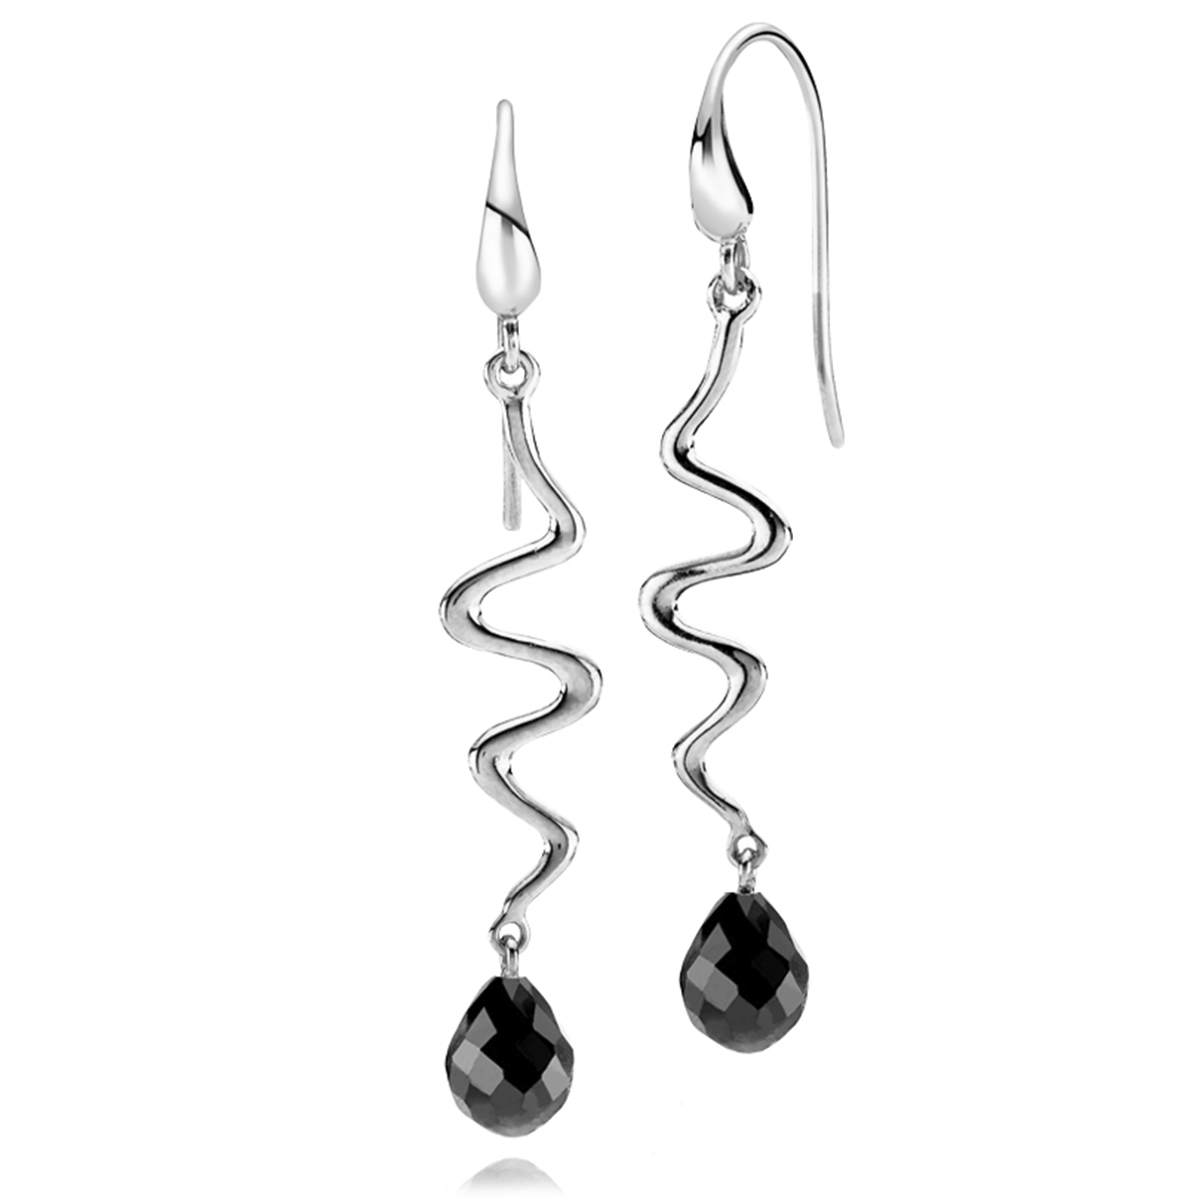 Saniya Earrings Black Onyx von Izabel Camille in Silber Sterling 925